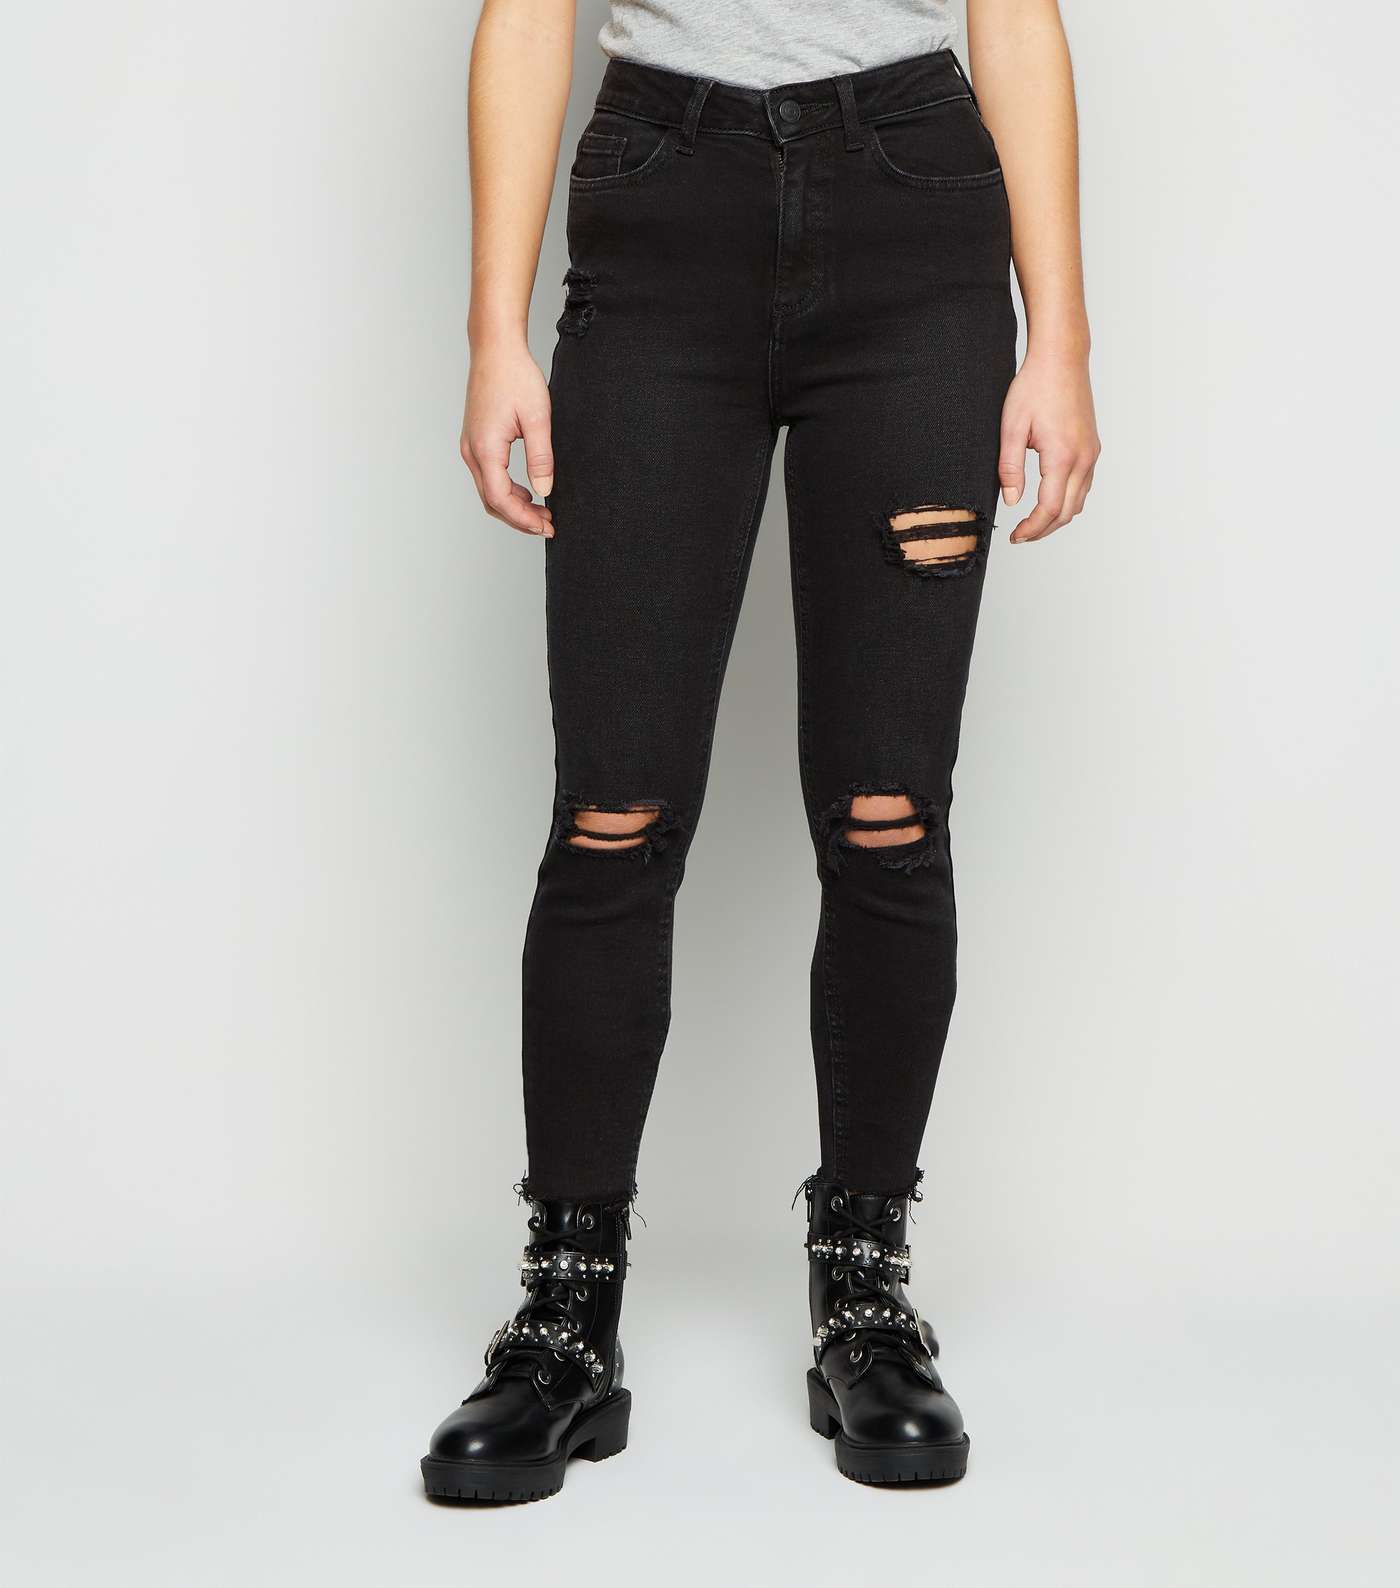 Petite Black Ripped Super Skinny Jeans Image 2